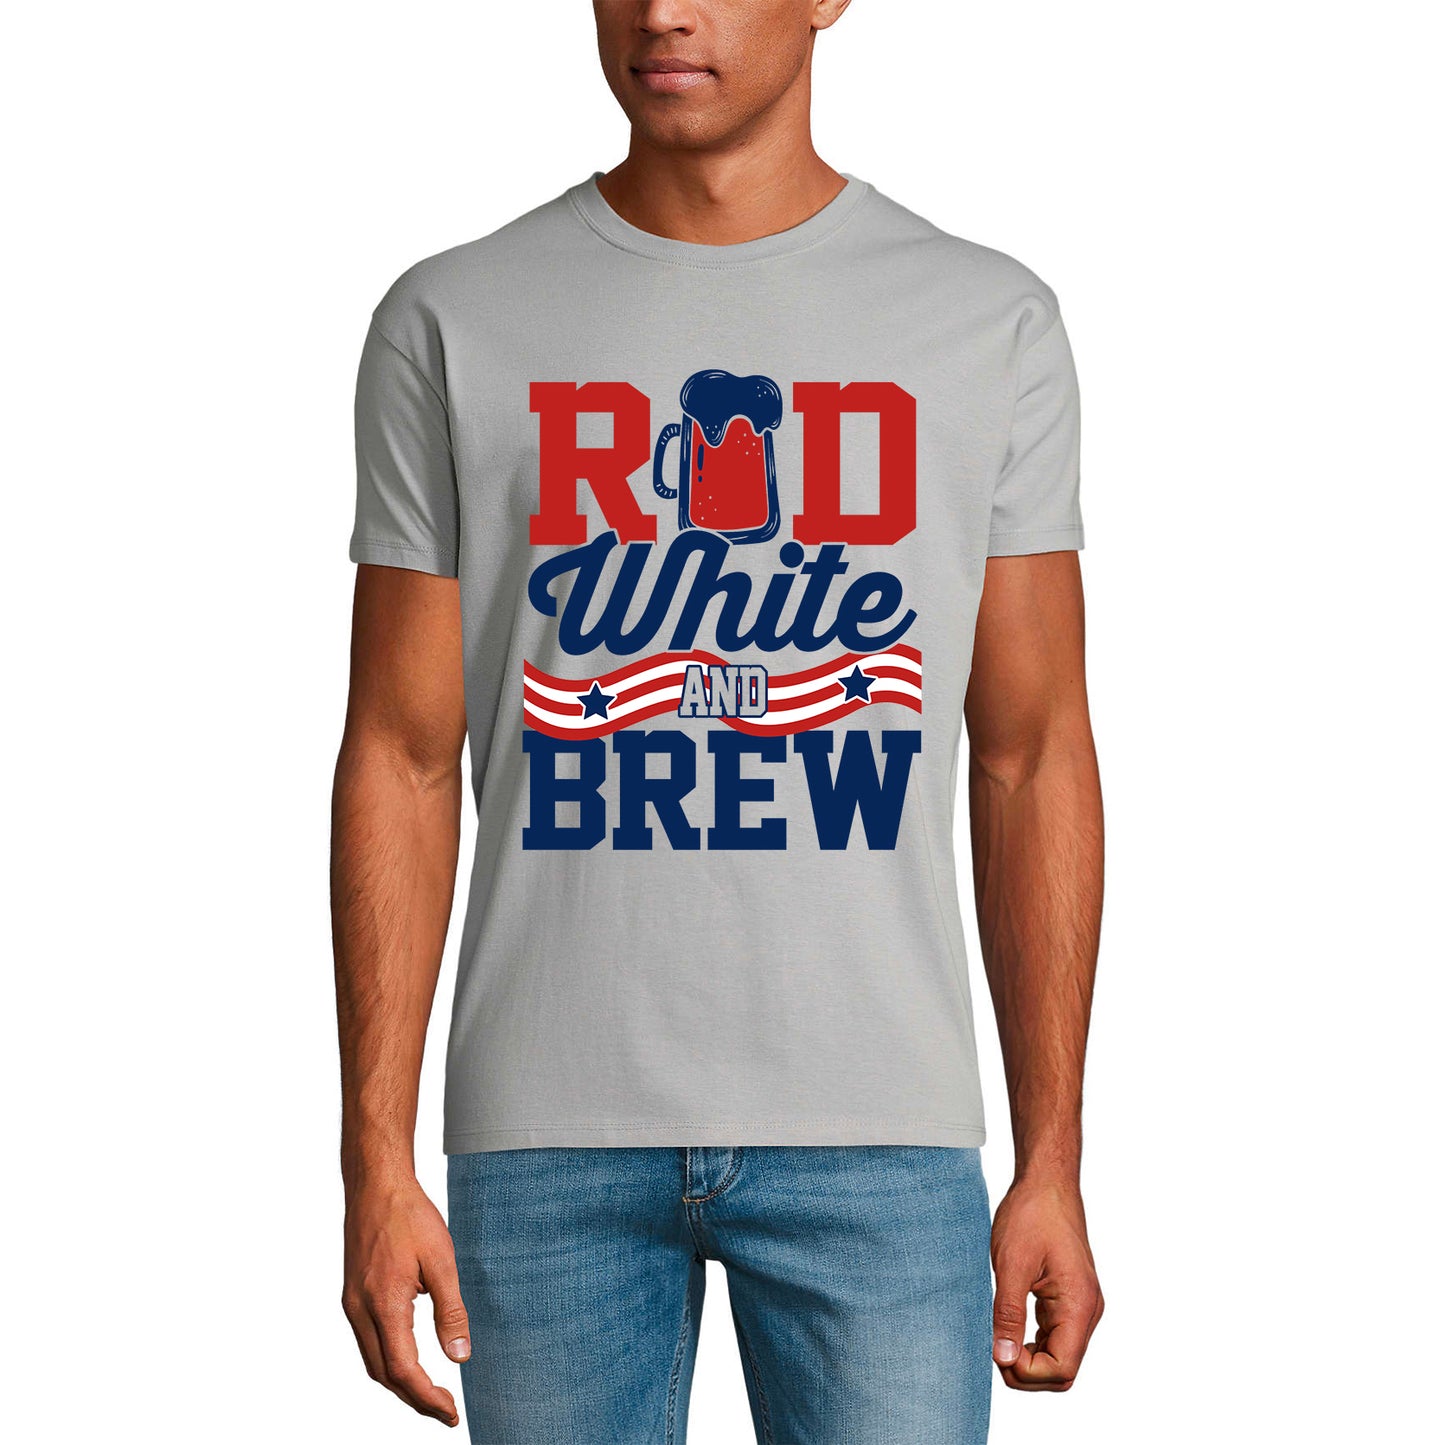 ULTRABASIC Men's Novelty T-Shirt Red White and Brew - Beer Lover Tee Shirt